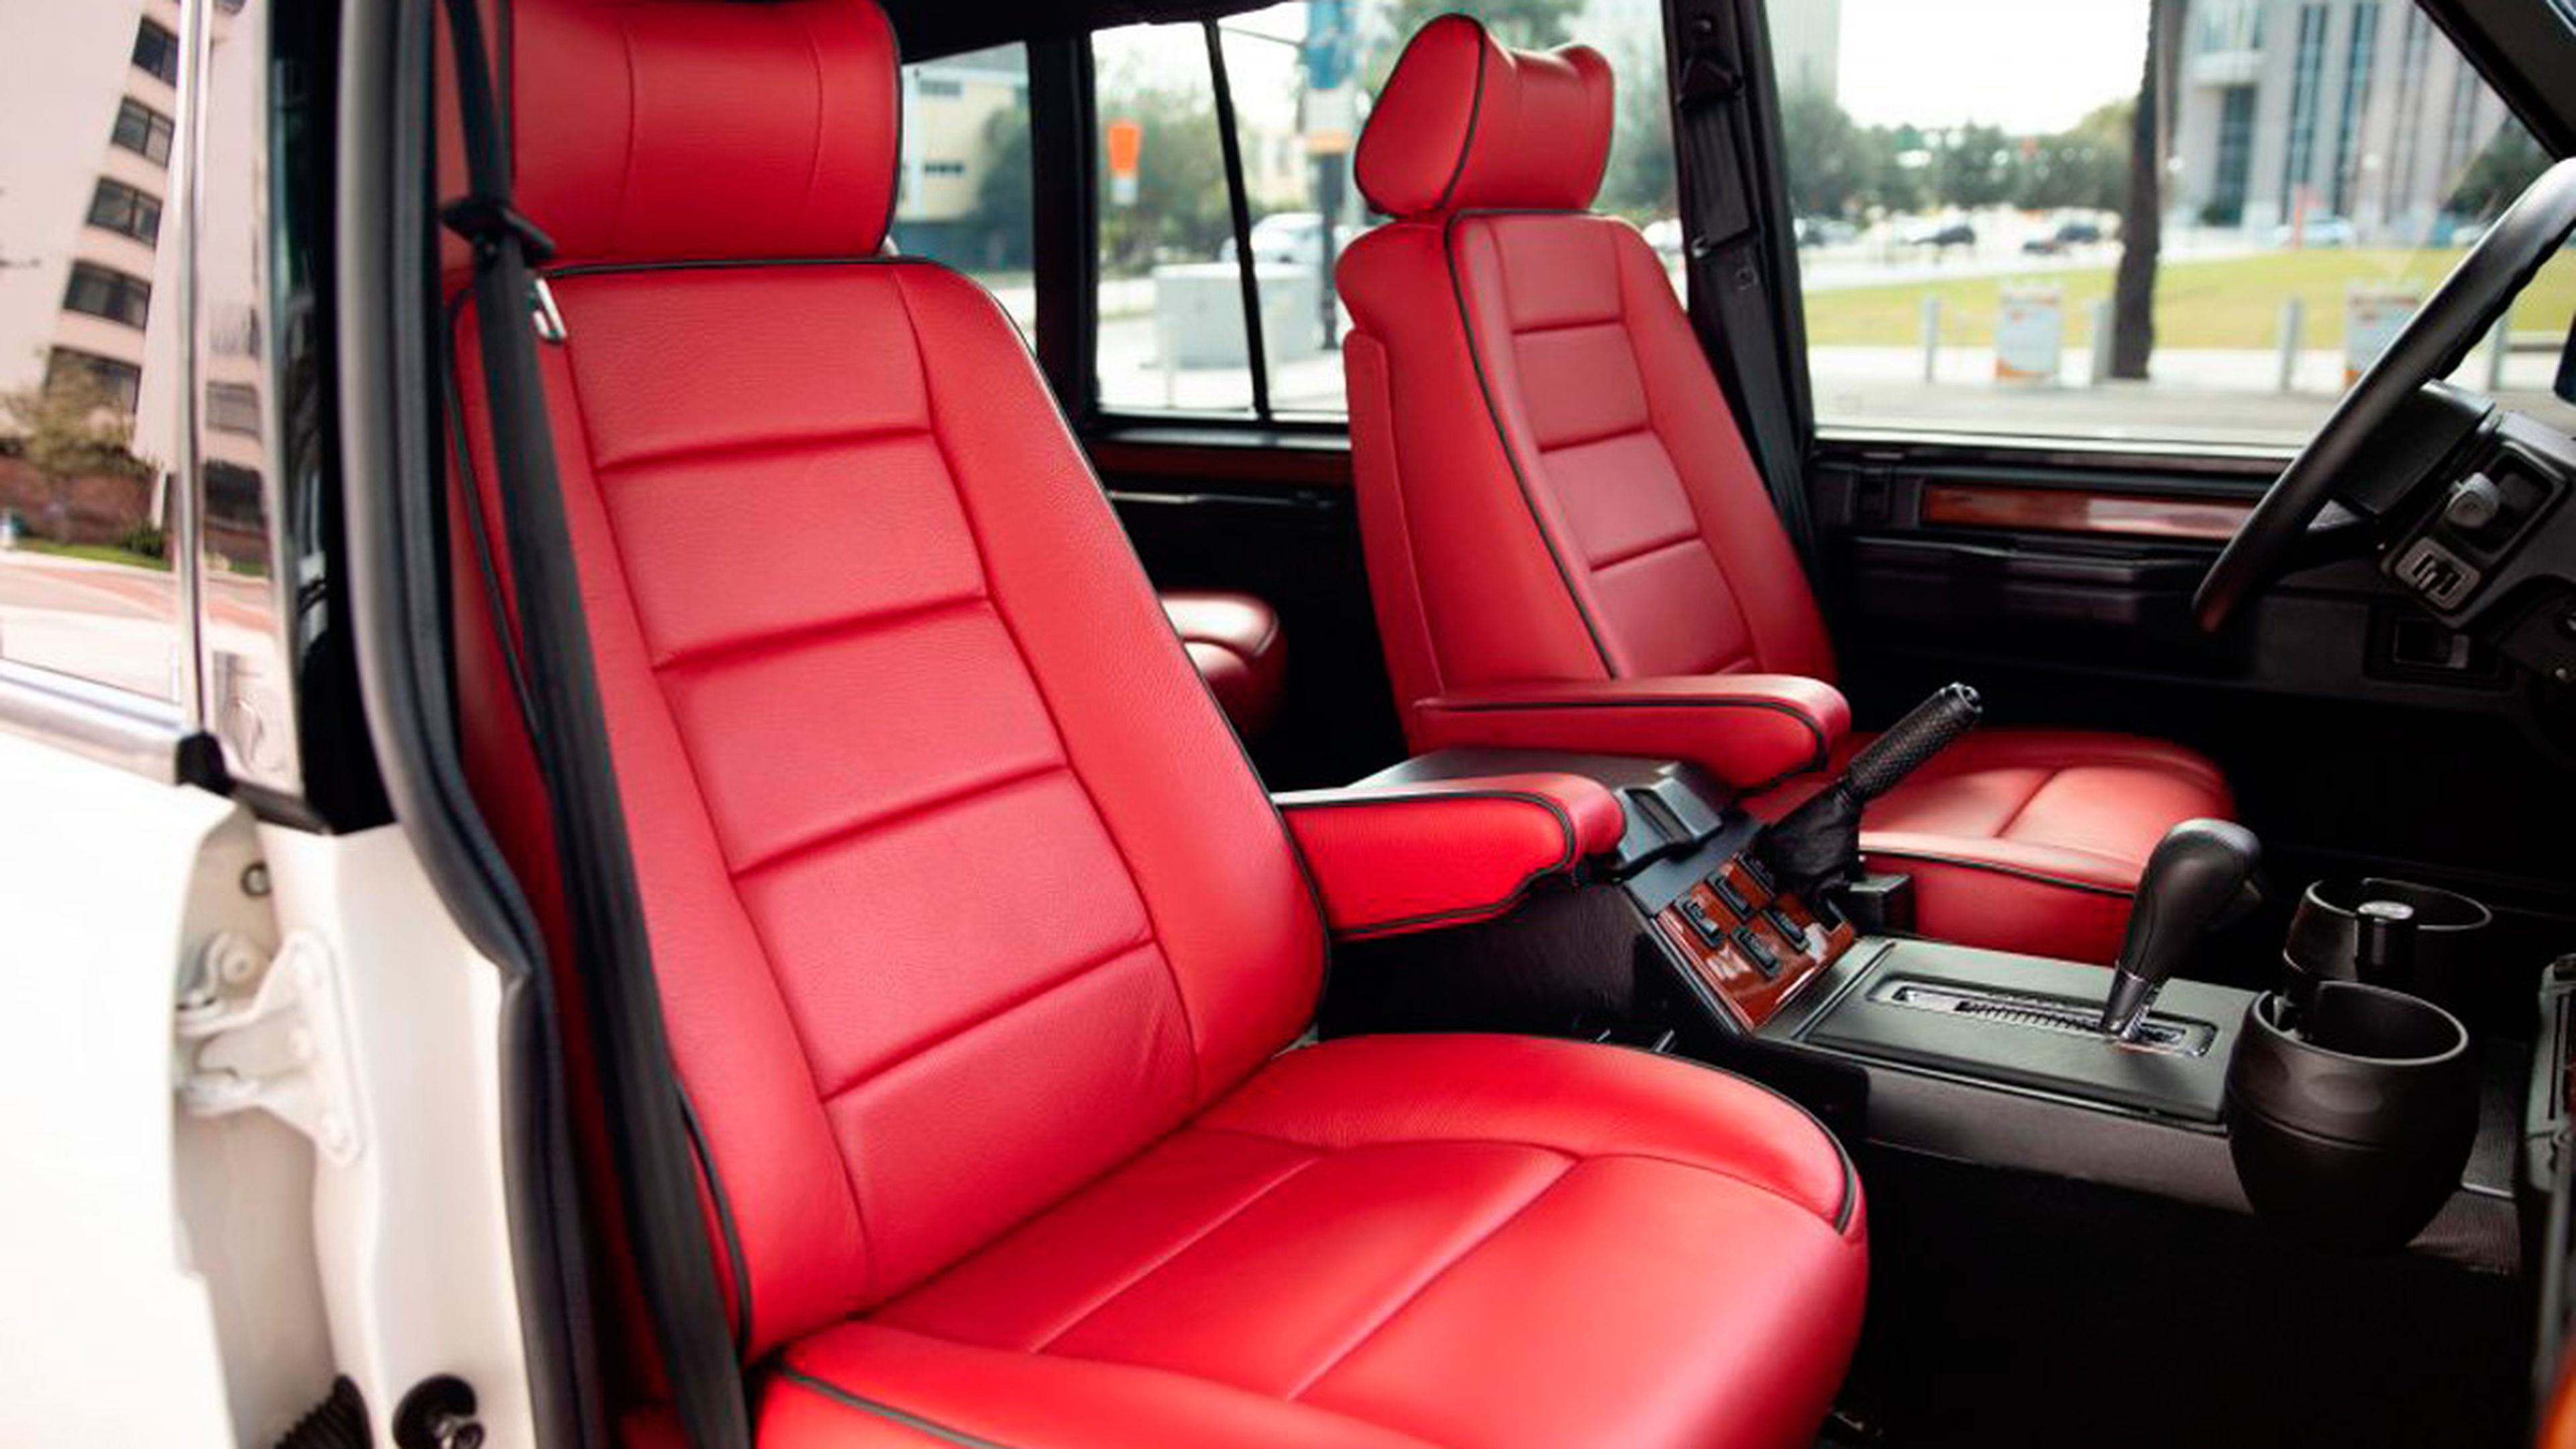 Range Rover Vogue clasico